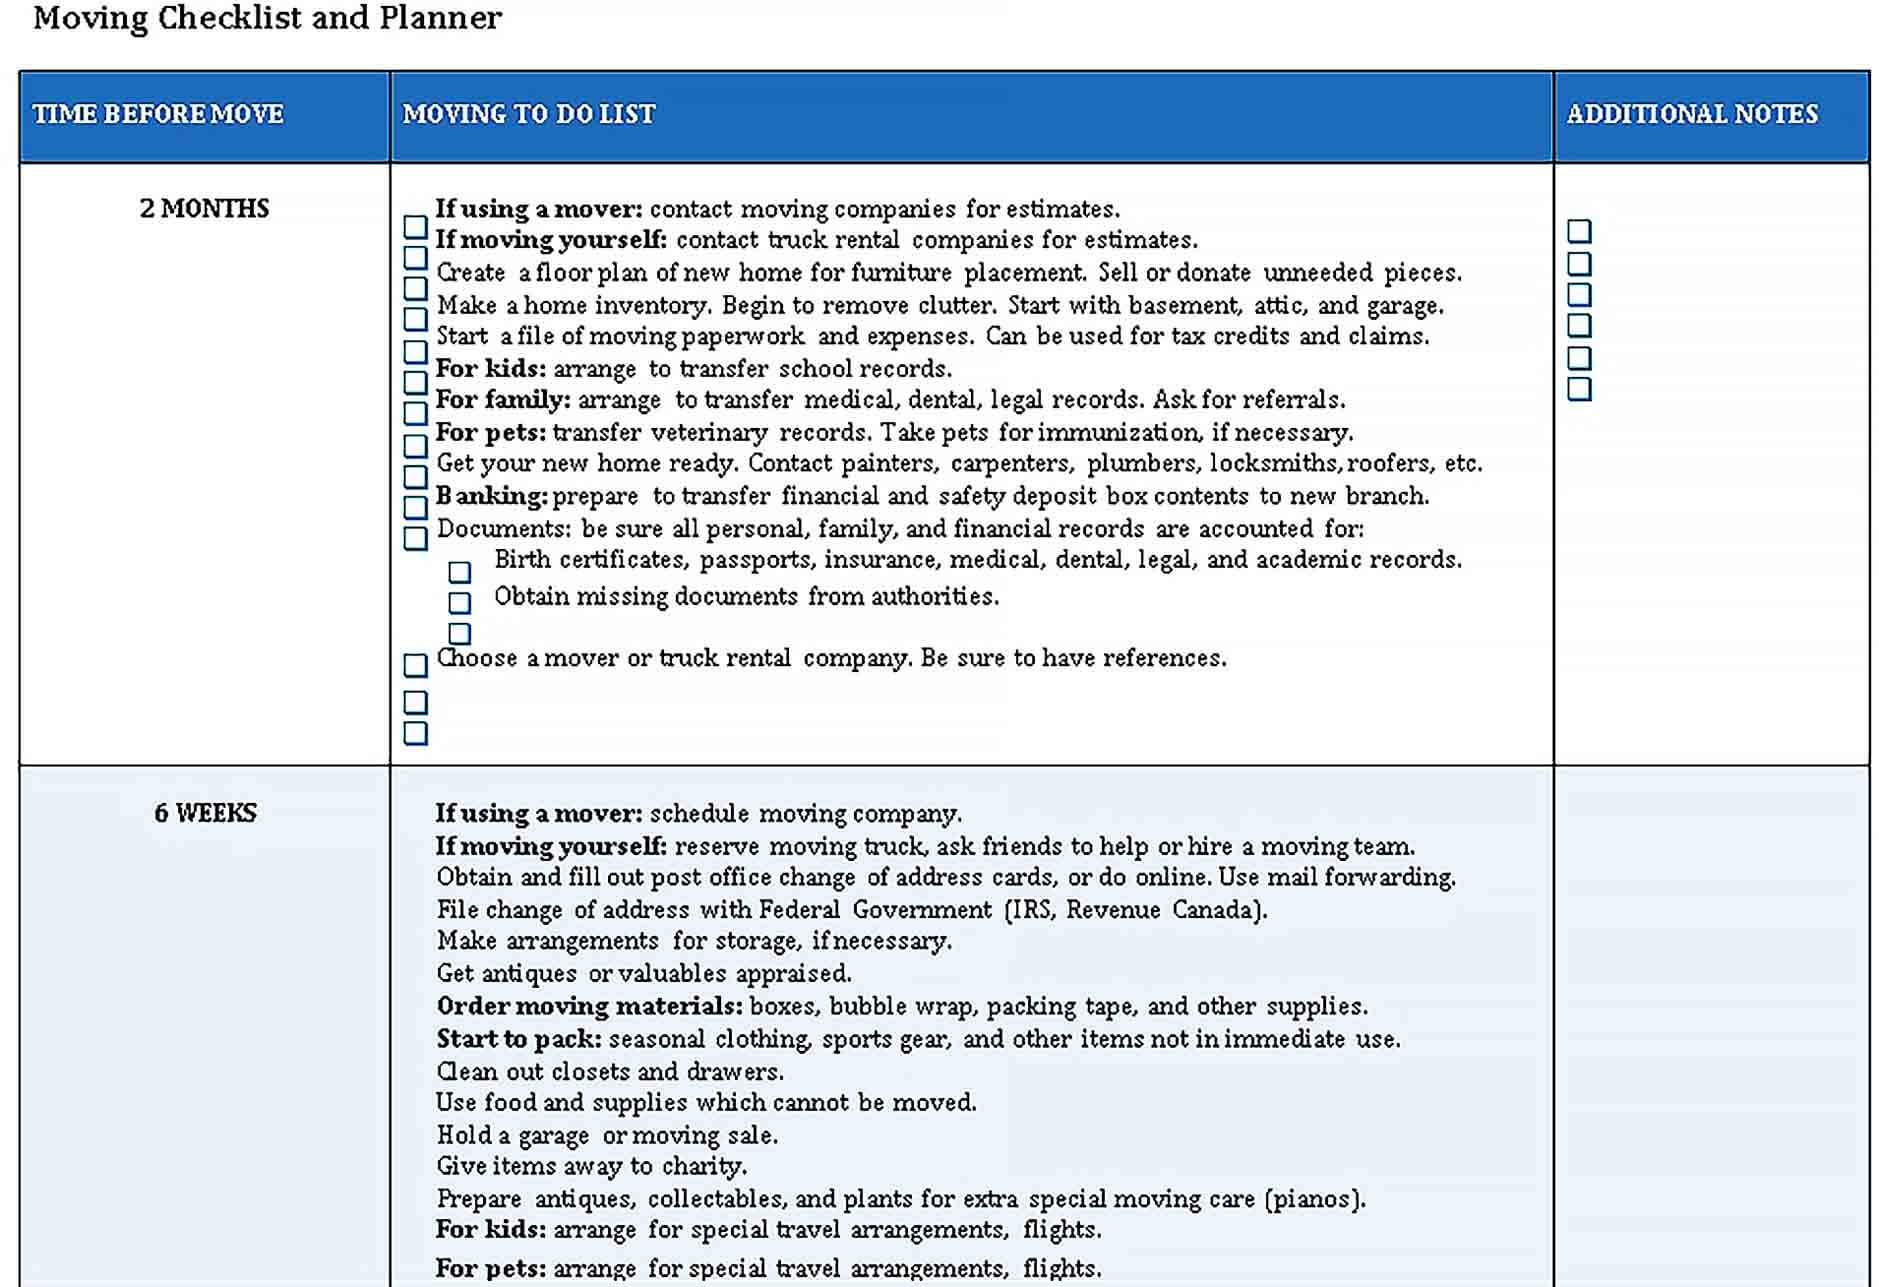 Sample Printable Moving Checklist Planner PDF Format